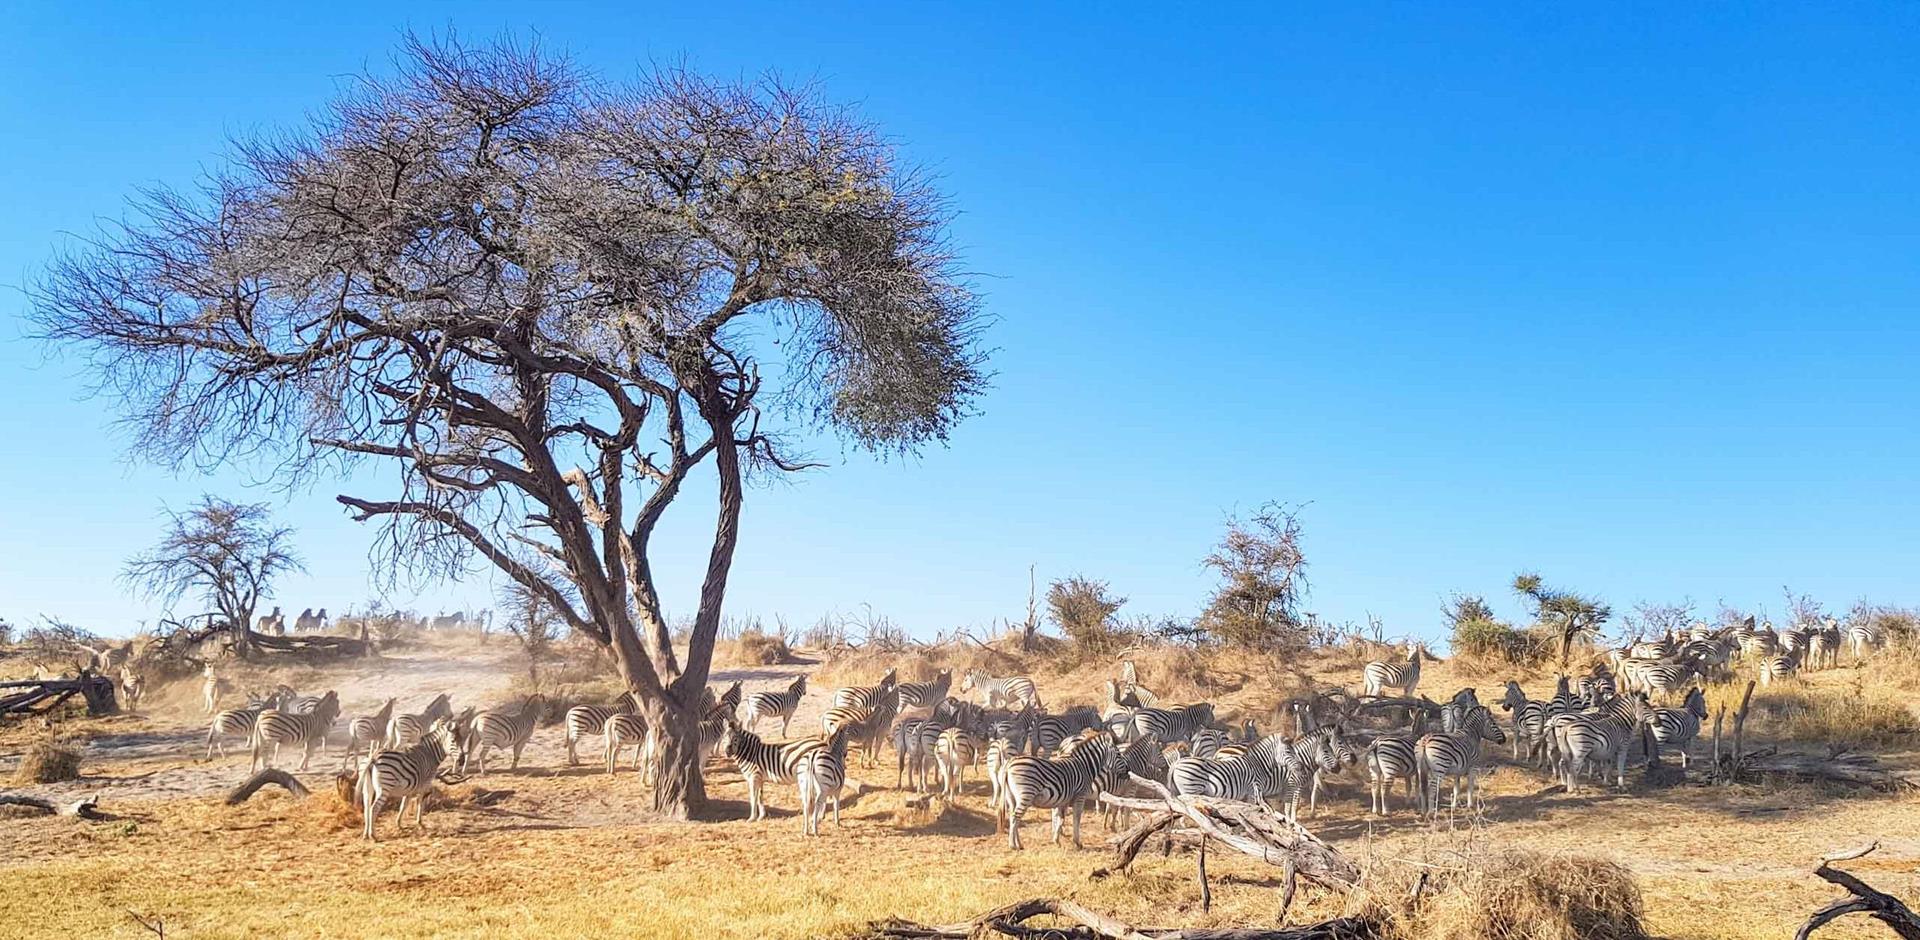 A&K Itinerary: The spectacular zebra migration, Botswana